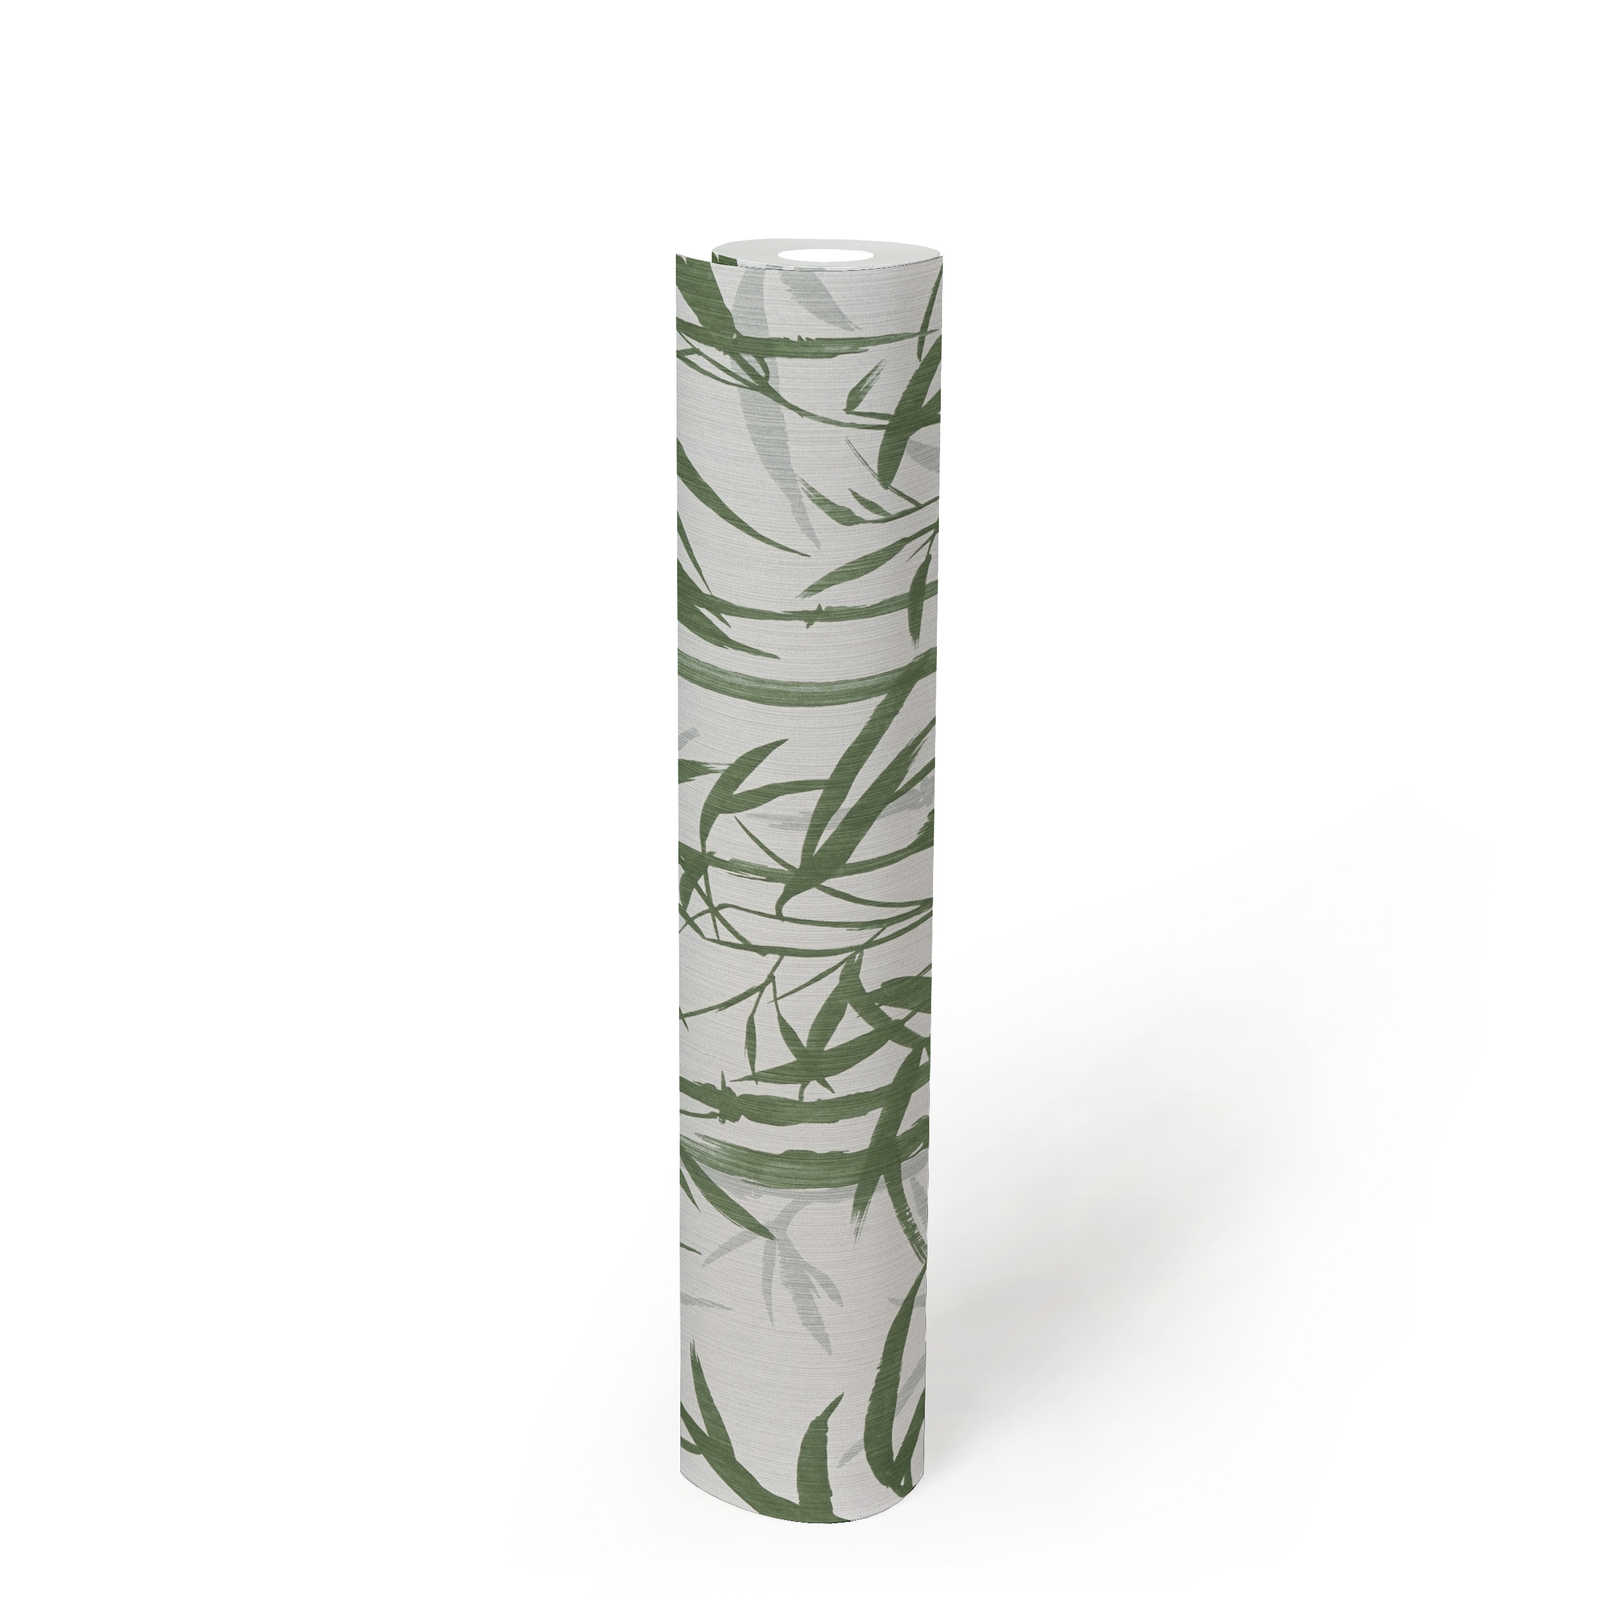             MICHALSKY papier peint intissé motif naturel bambou - crème, vert
        